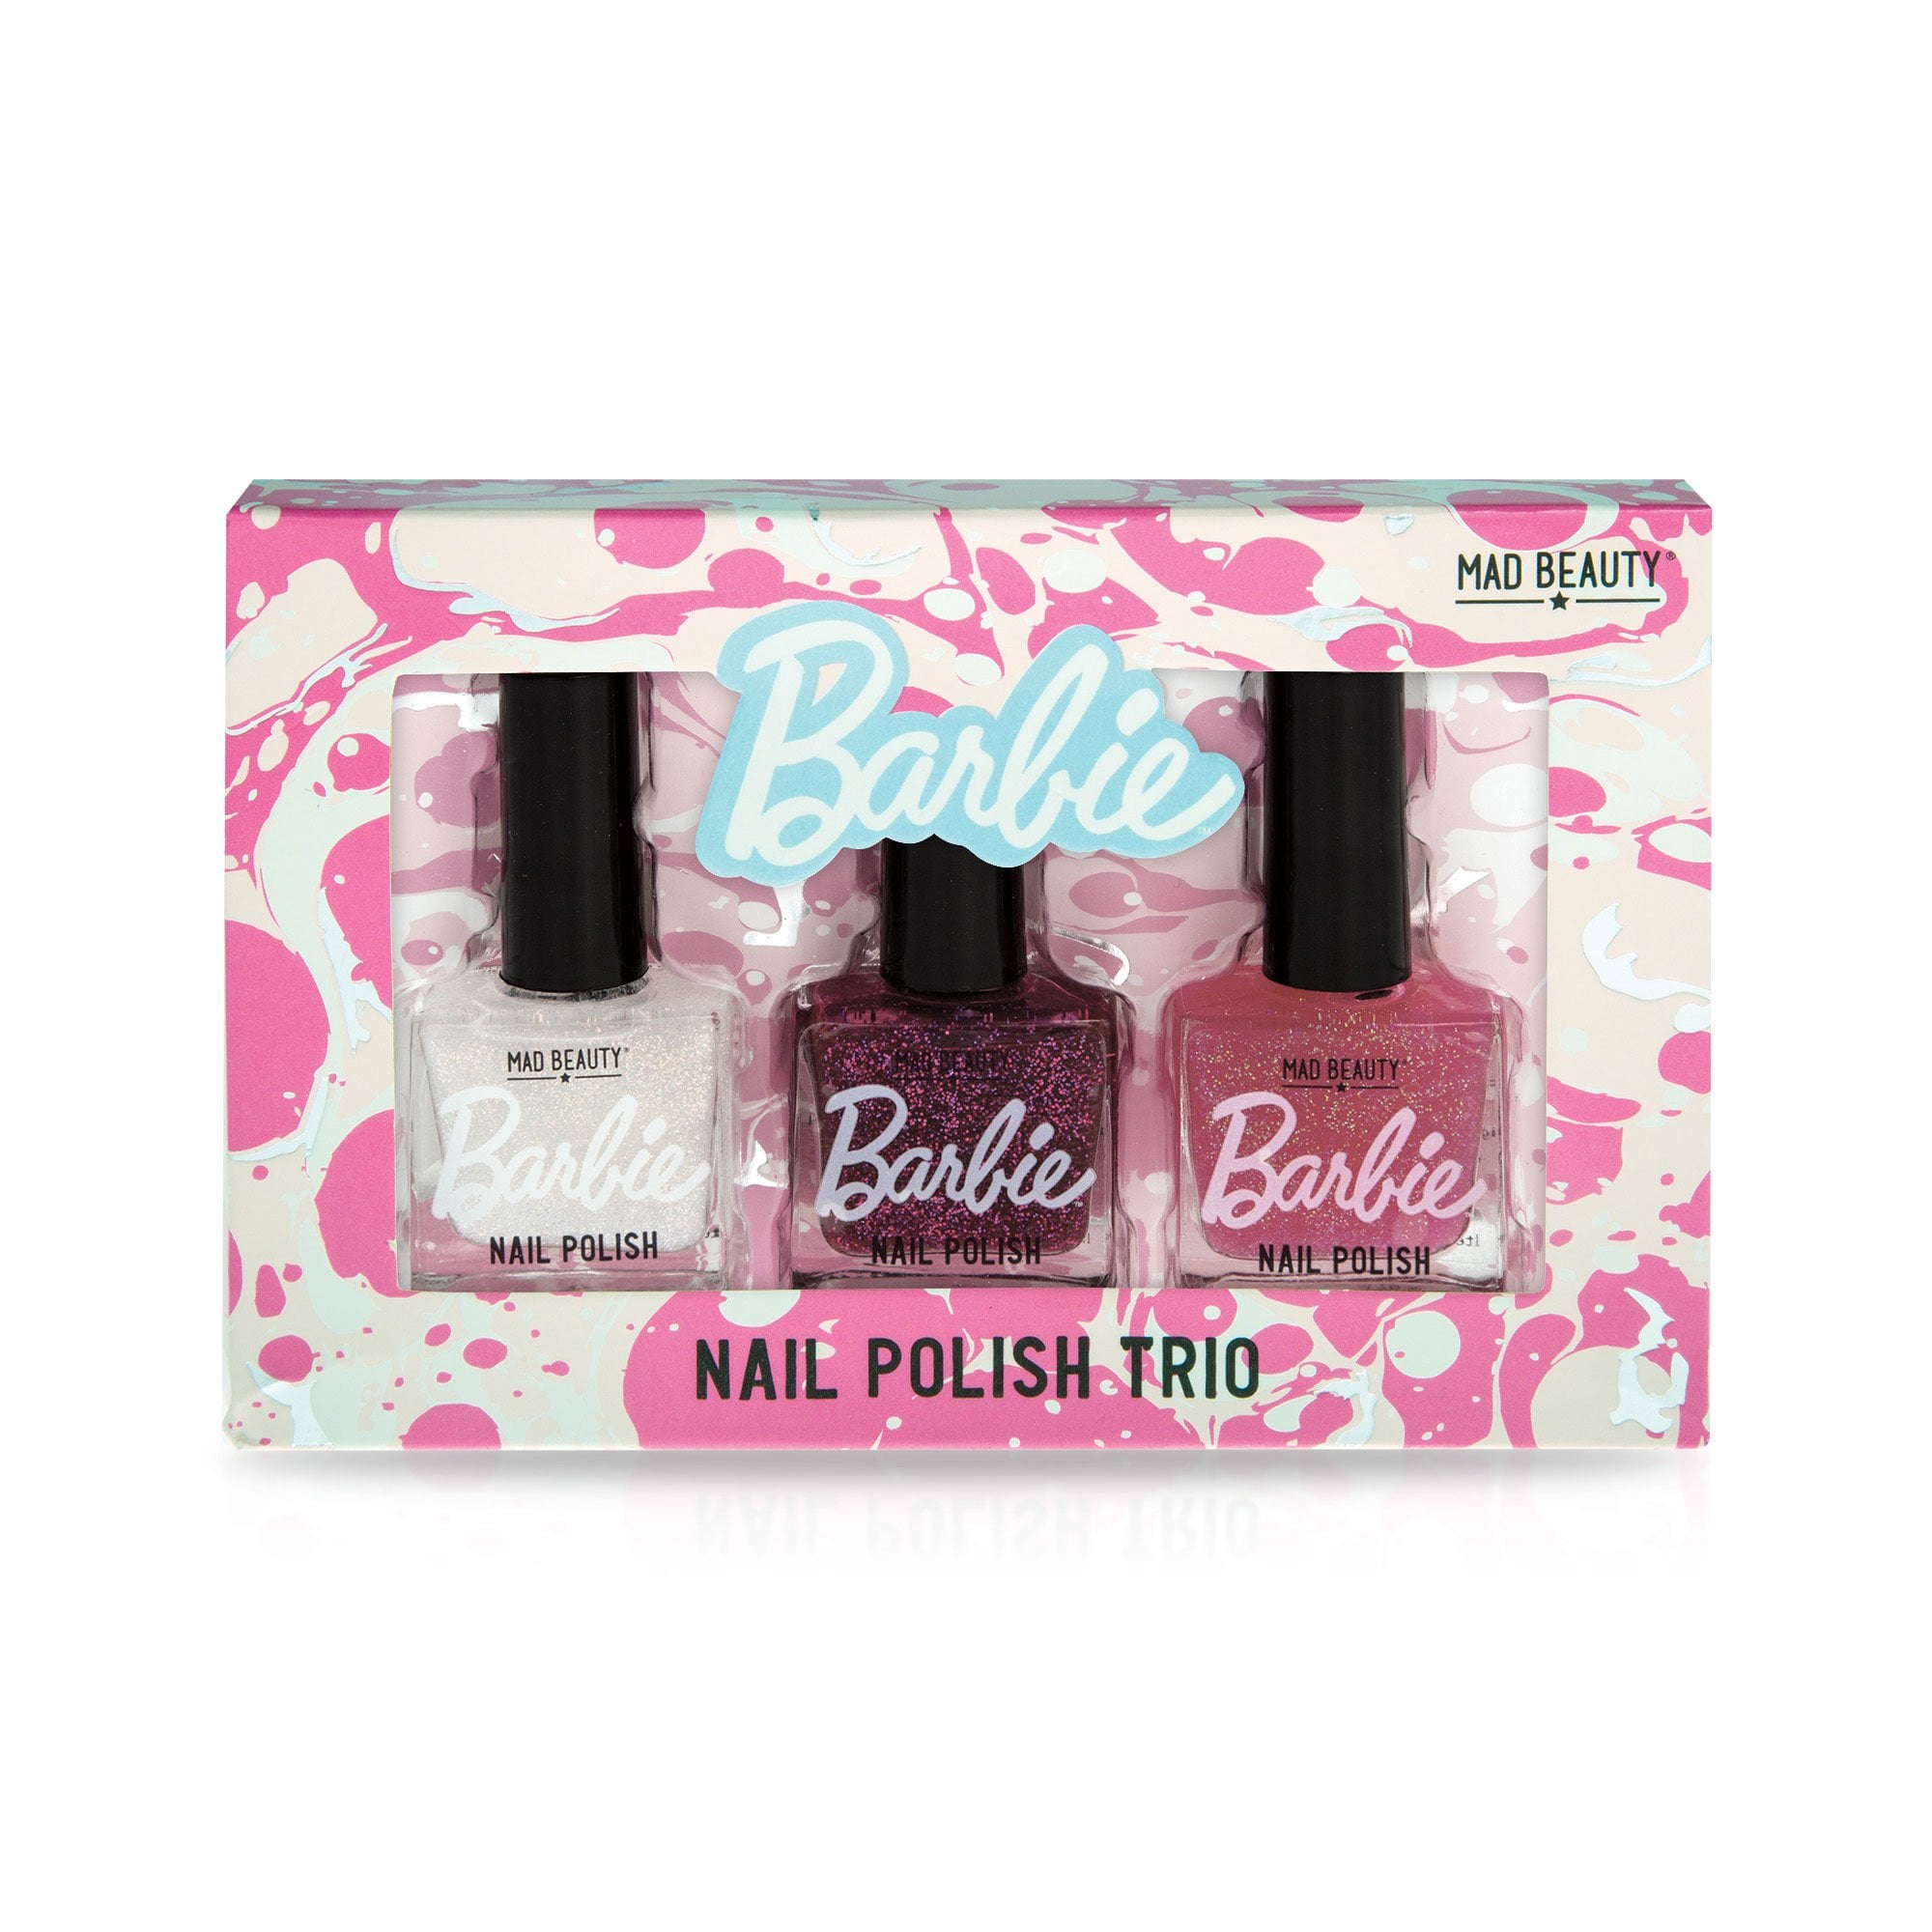 Mad Beauty Barbie Nail Polish Trio 3x 12ml RRP £8.99 CLEARANCE XL £6.99